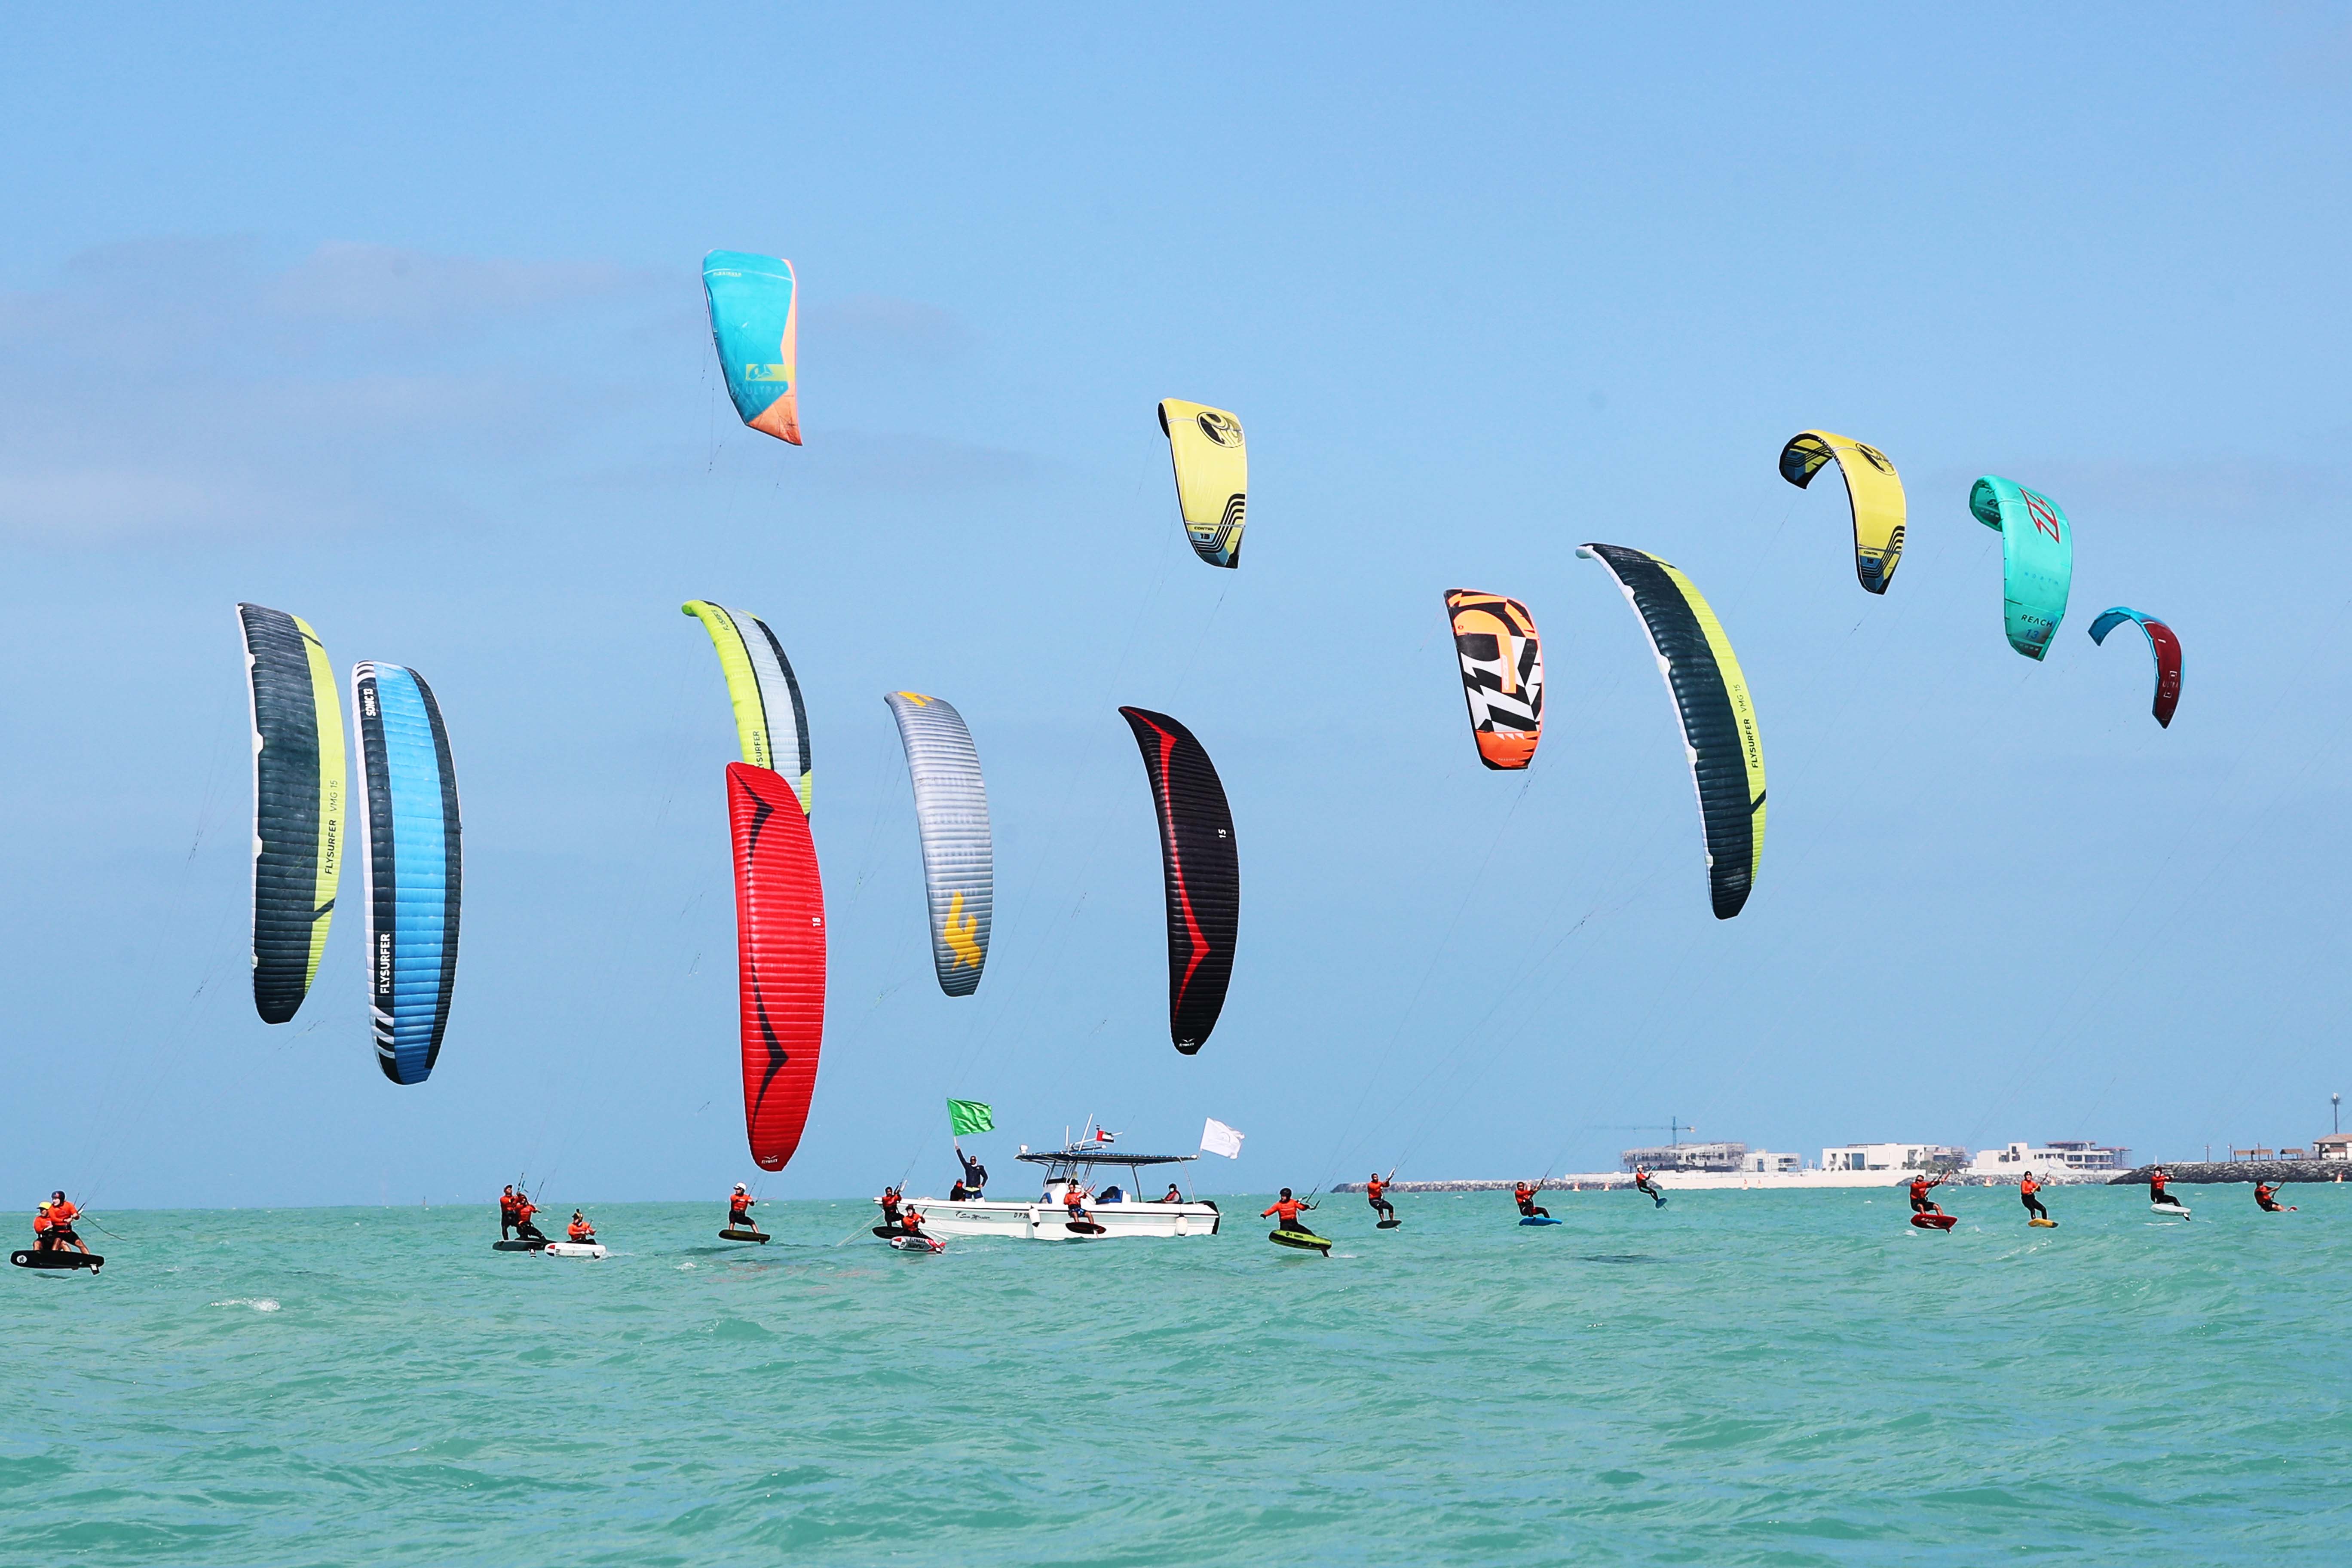 Kitesurfing kicks off at Kite Beach tomorrow